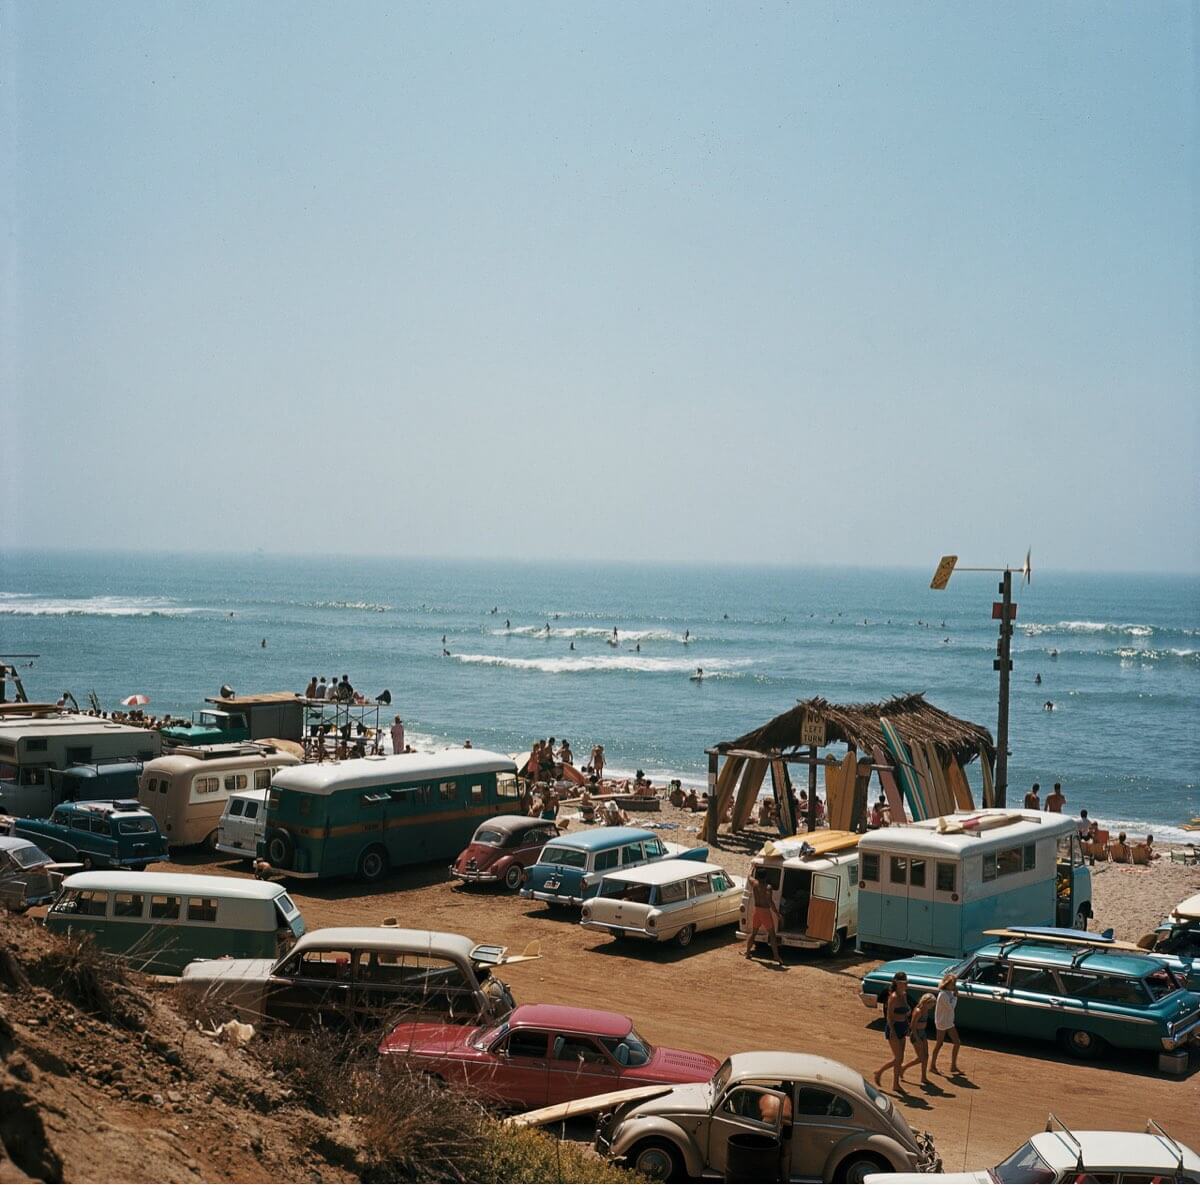 1960s California surf beach scene